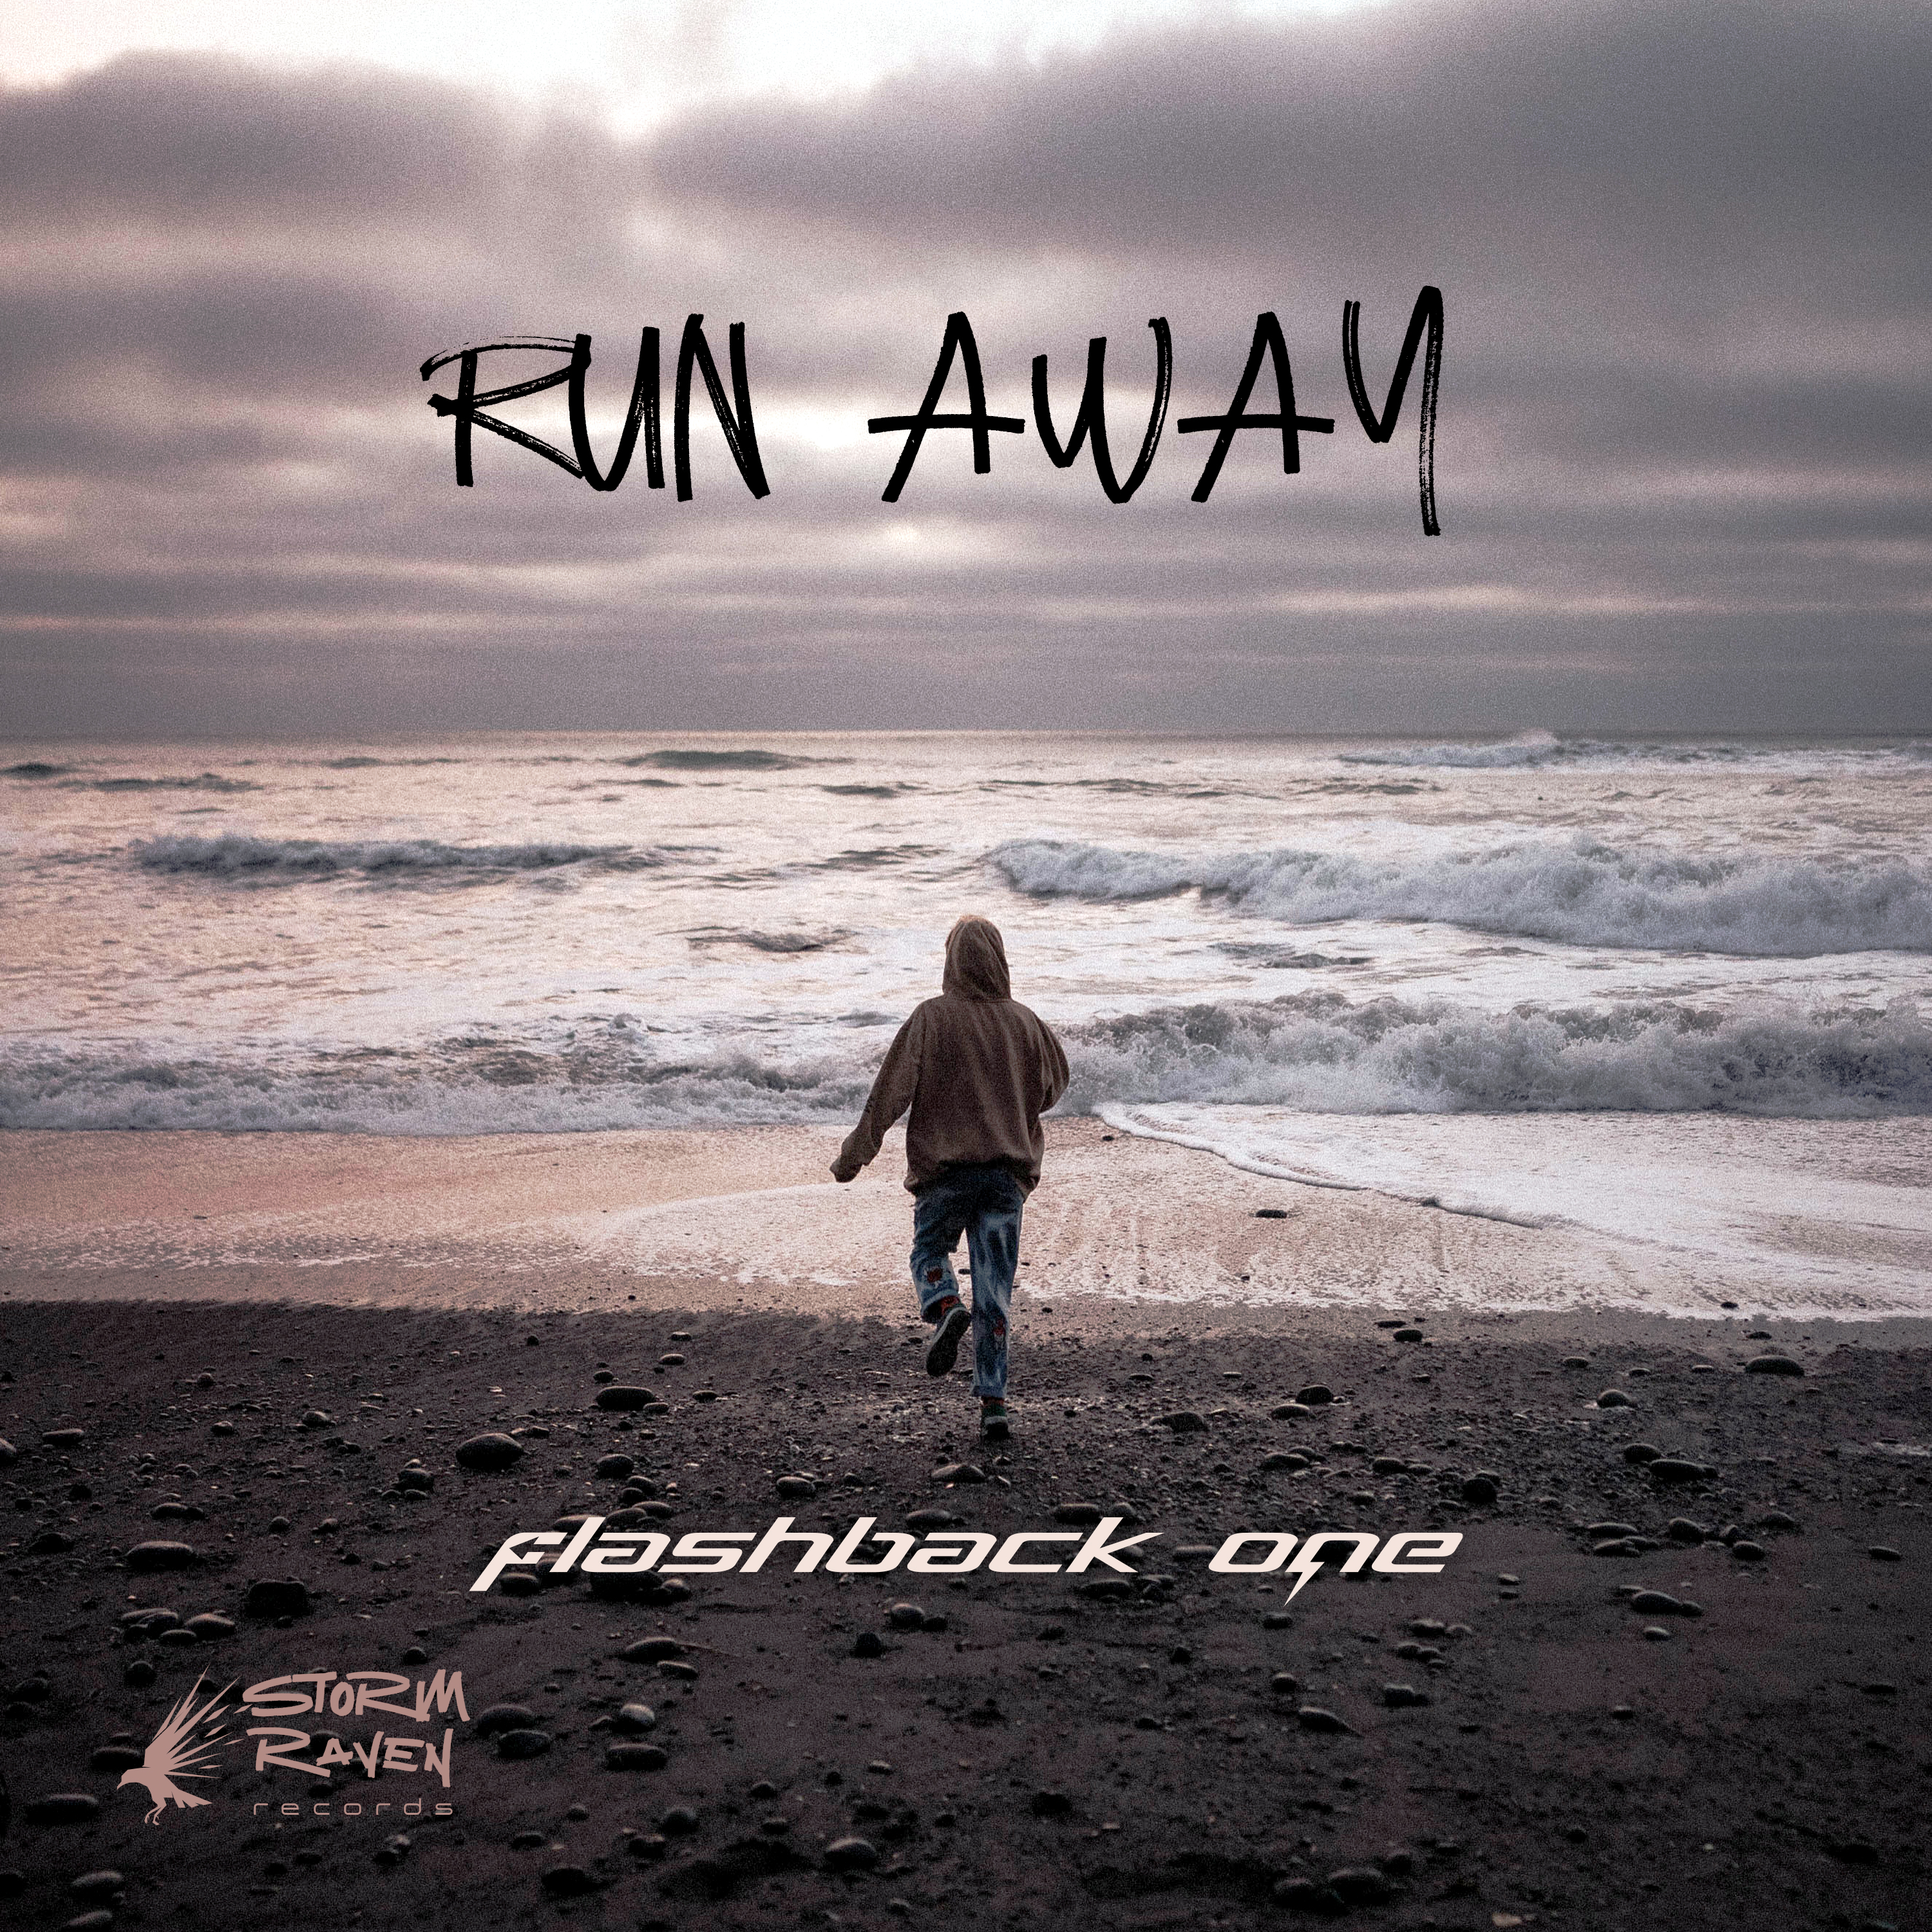 Flashback One – “Run Away”